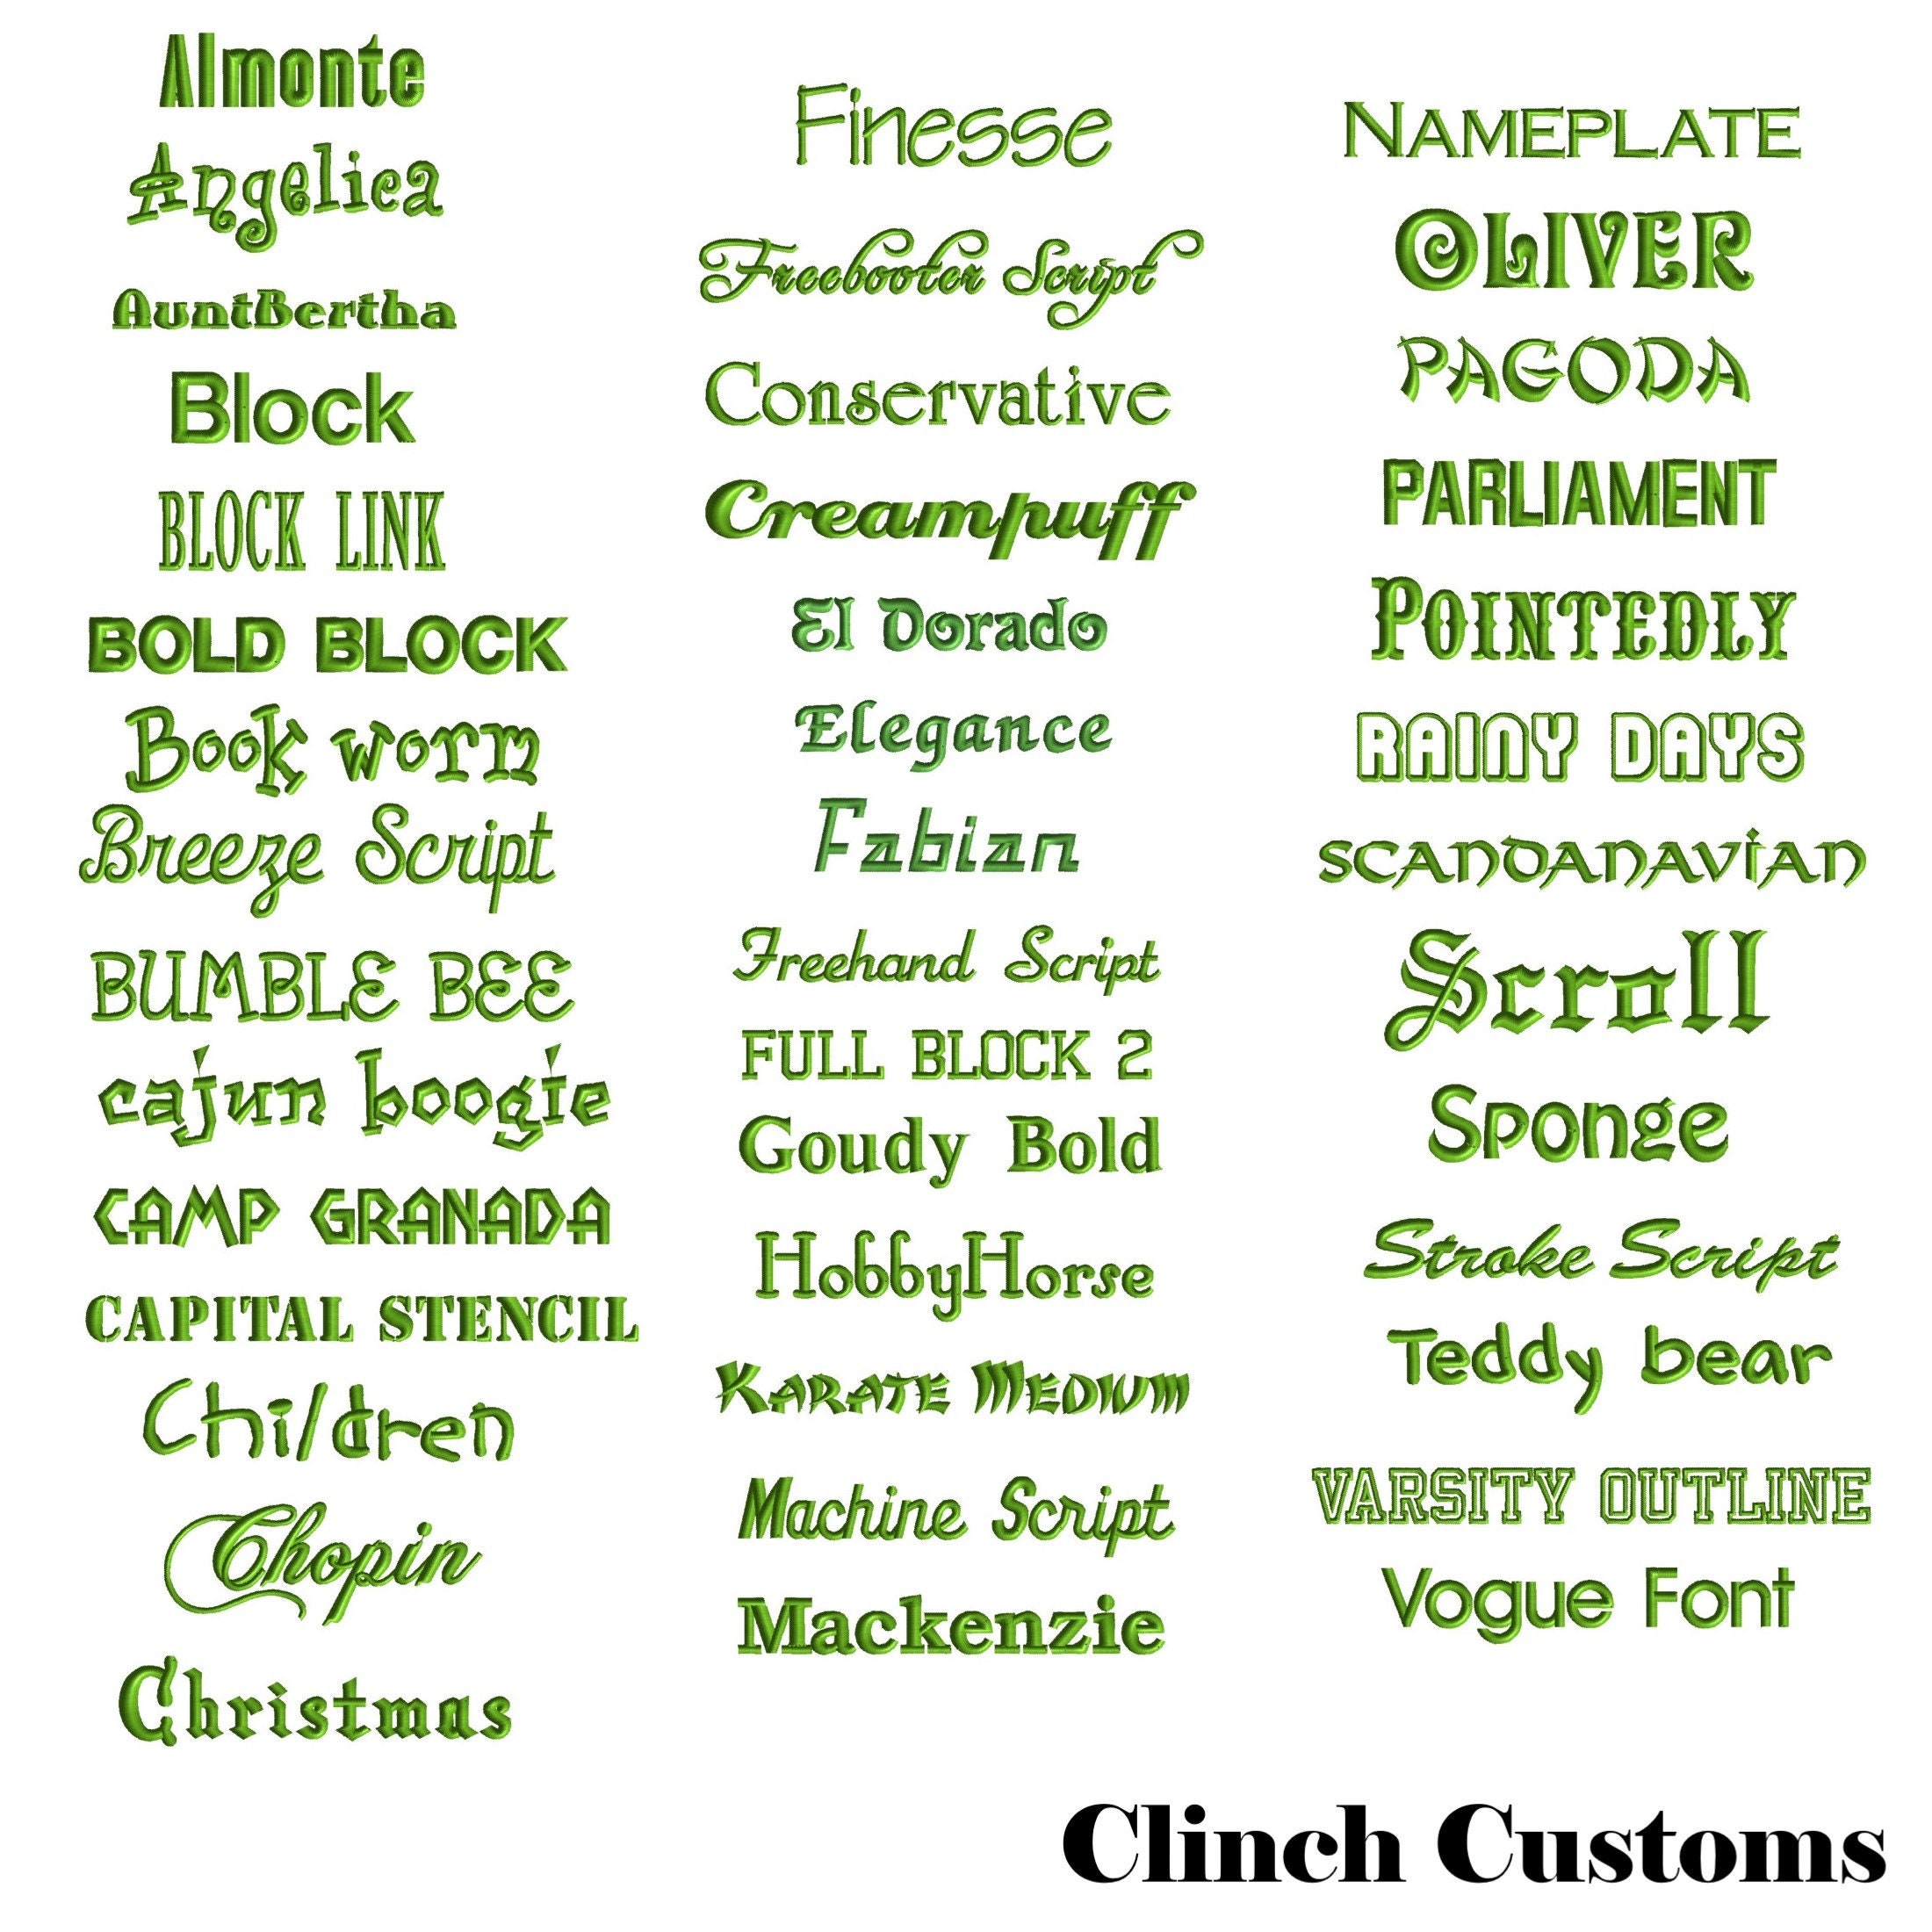 Clinch customs